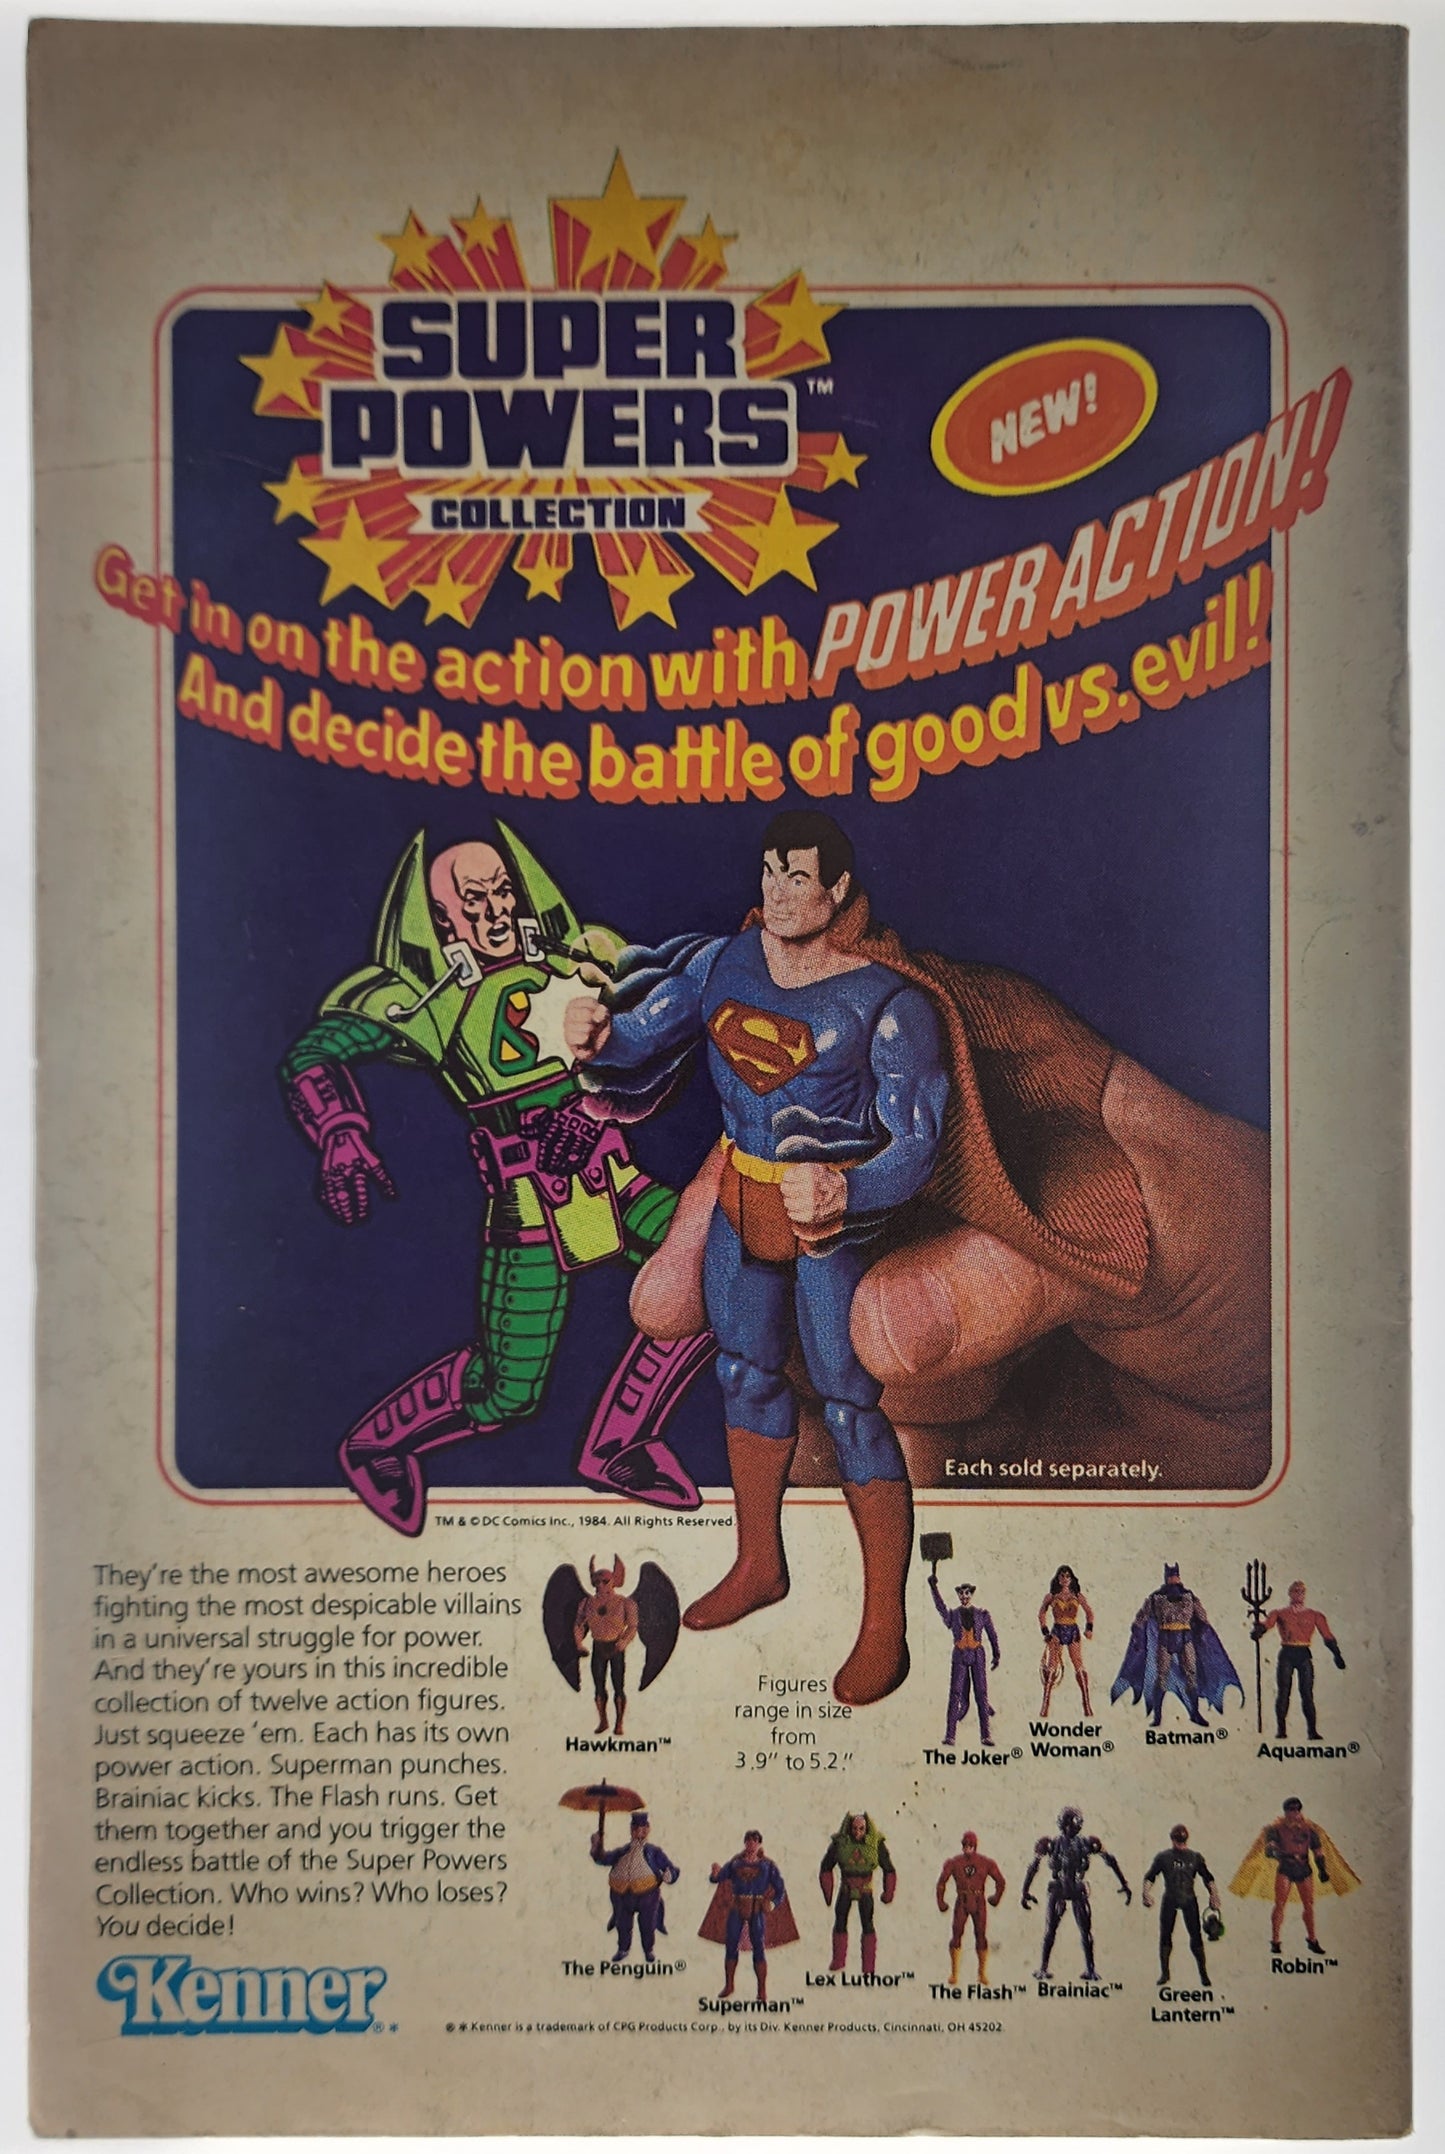 SUPERMAN AND SUPERBOY #87 (1985)